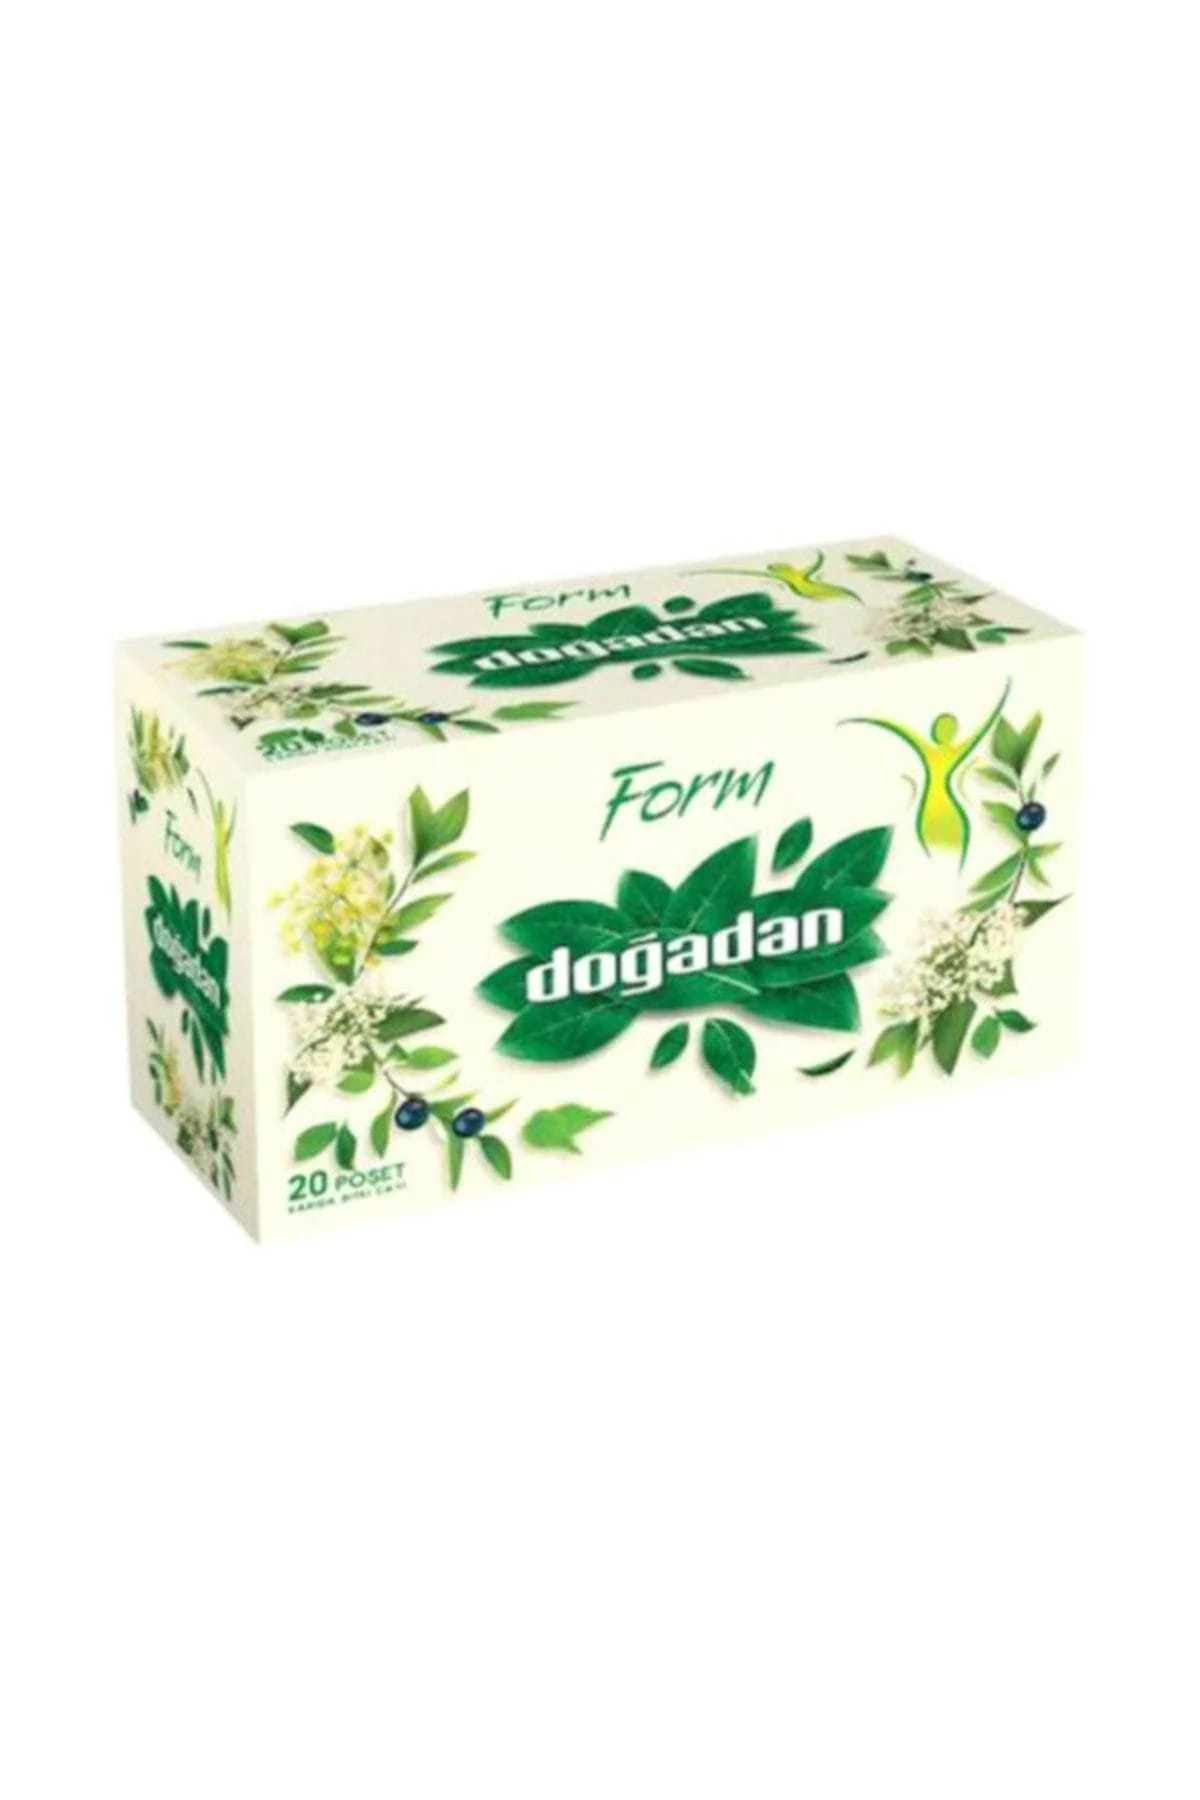 Mix Form Tea, Dogadan